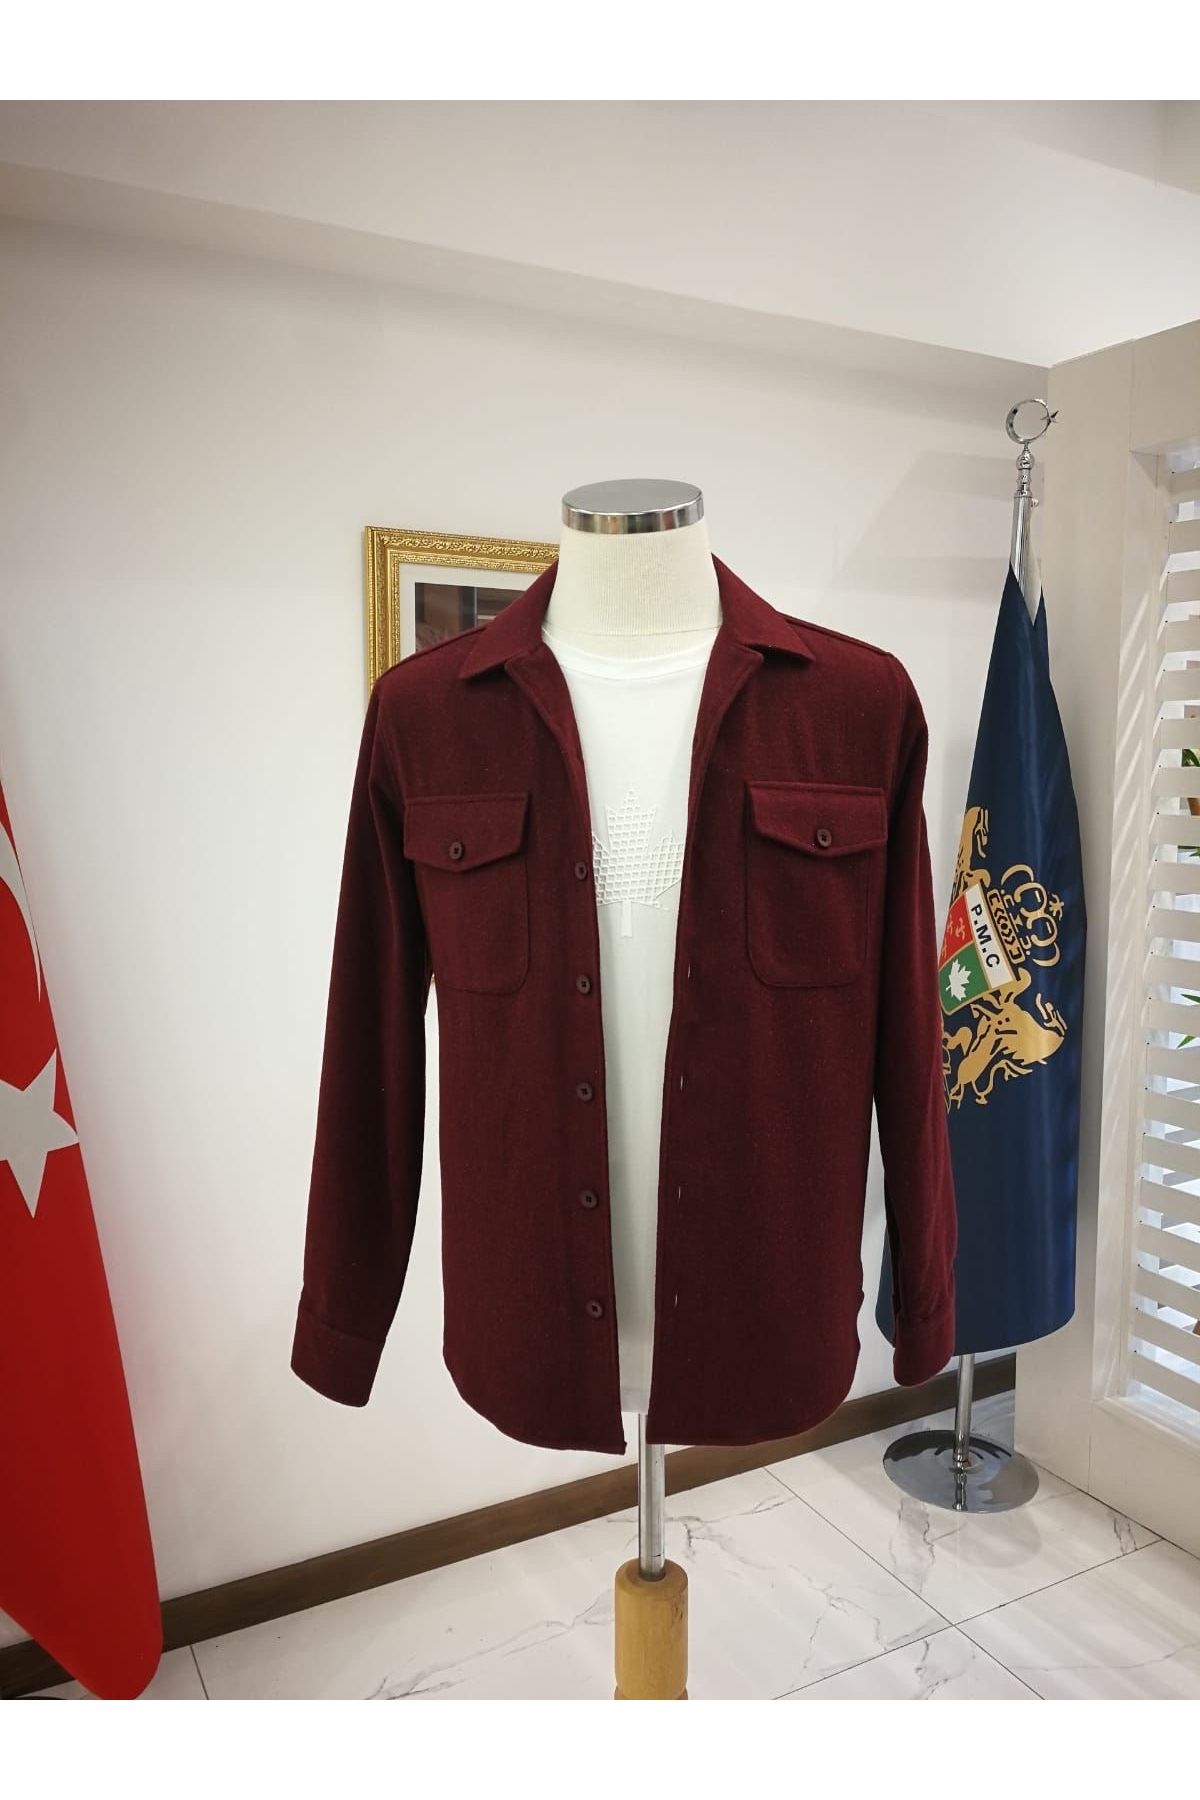 Paul Martin Canadian Shirt Jacket